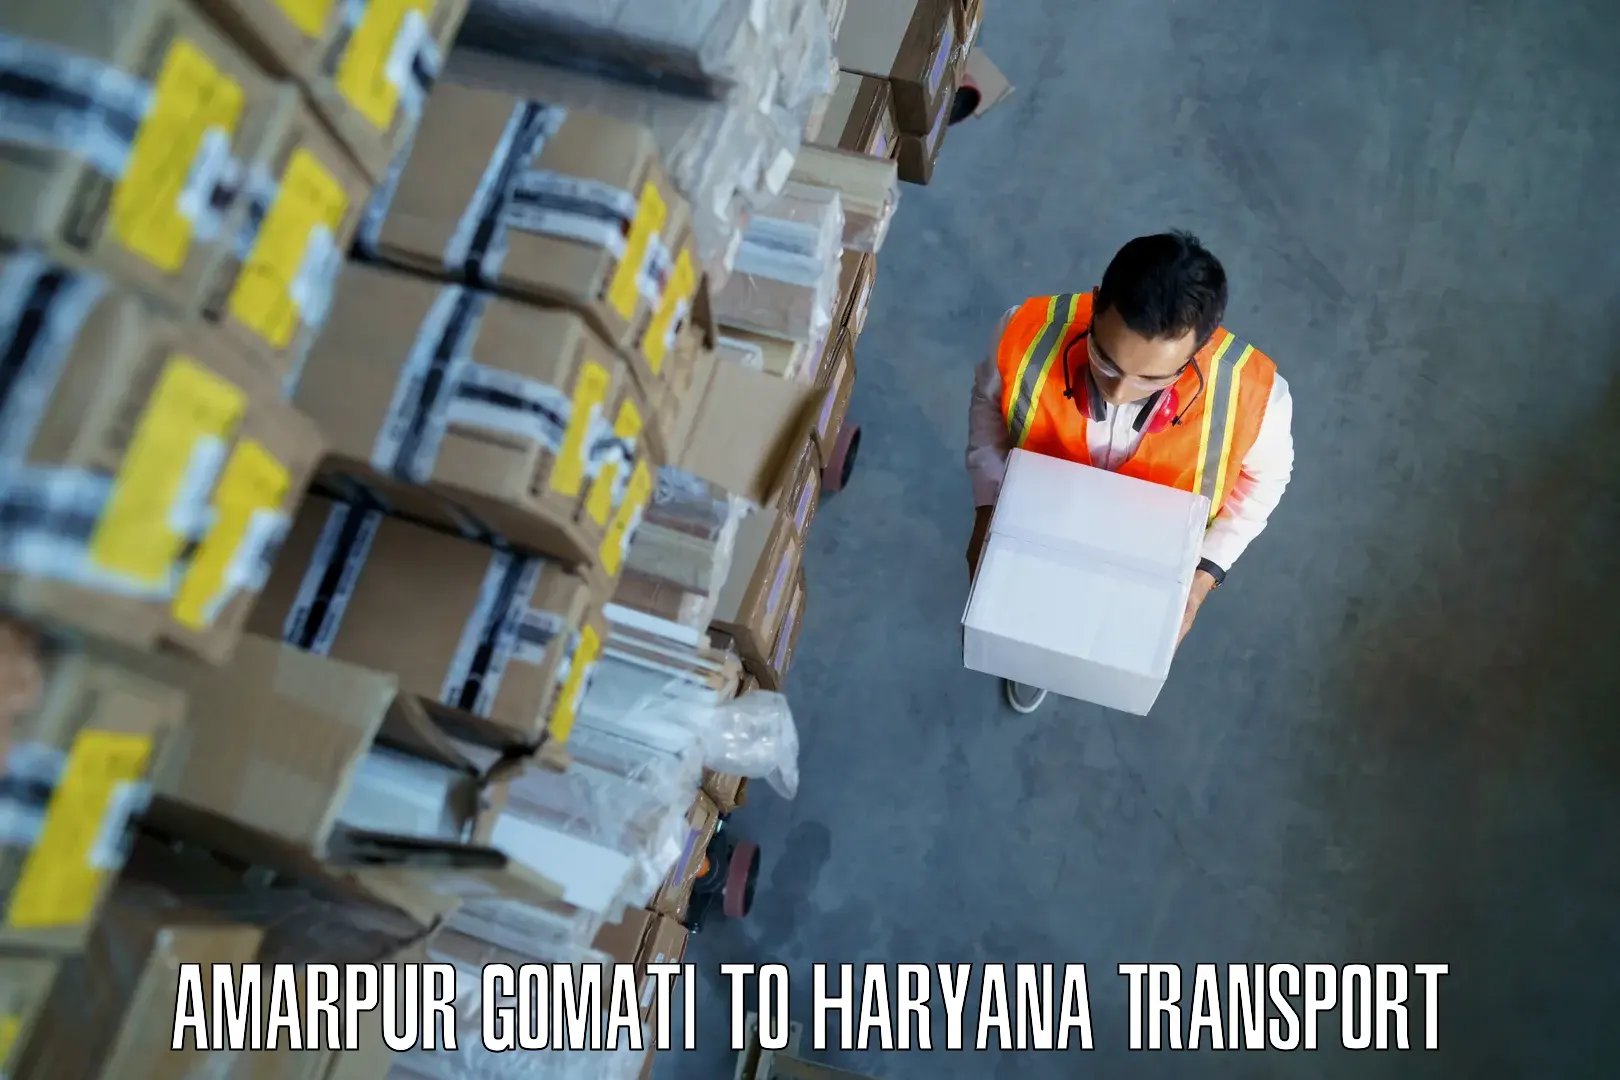 Pick up transport service Amarpur Gomati to Haryana